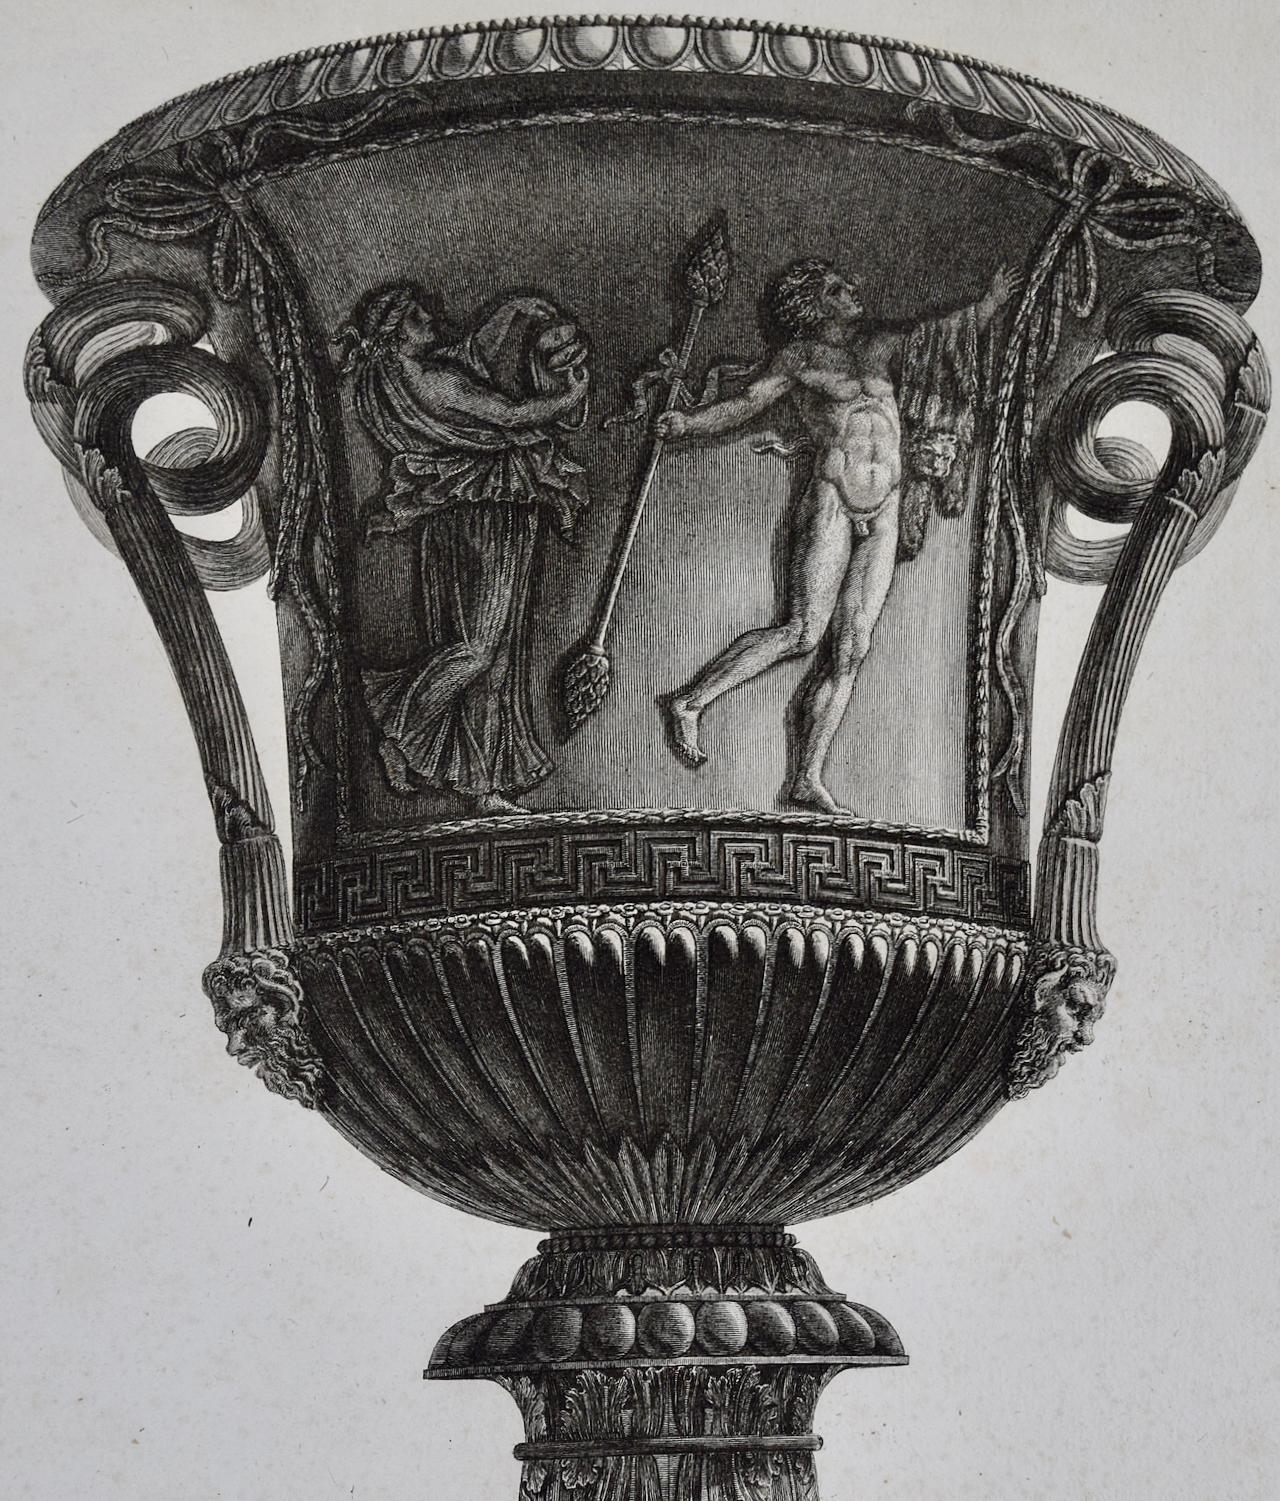 Ancient Roman Medici Marble Vase: An 18th Century Etching by Piranesi - Print by Giovanni Battista Piranesi